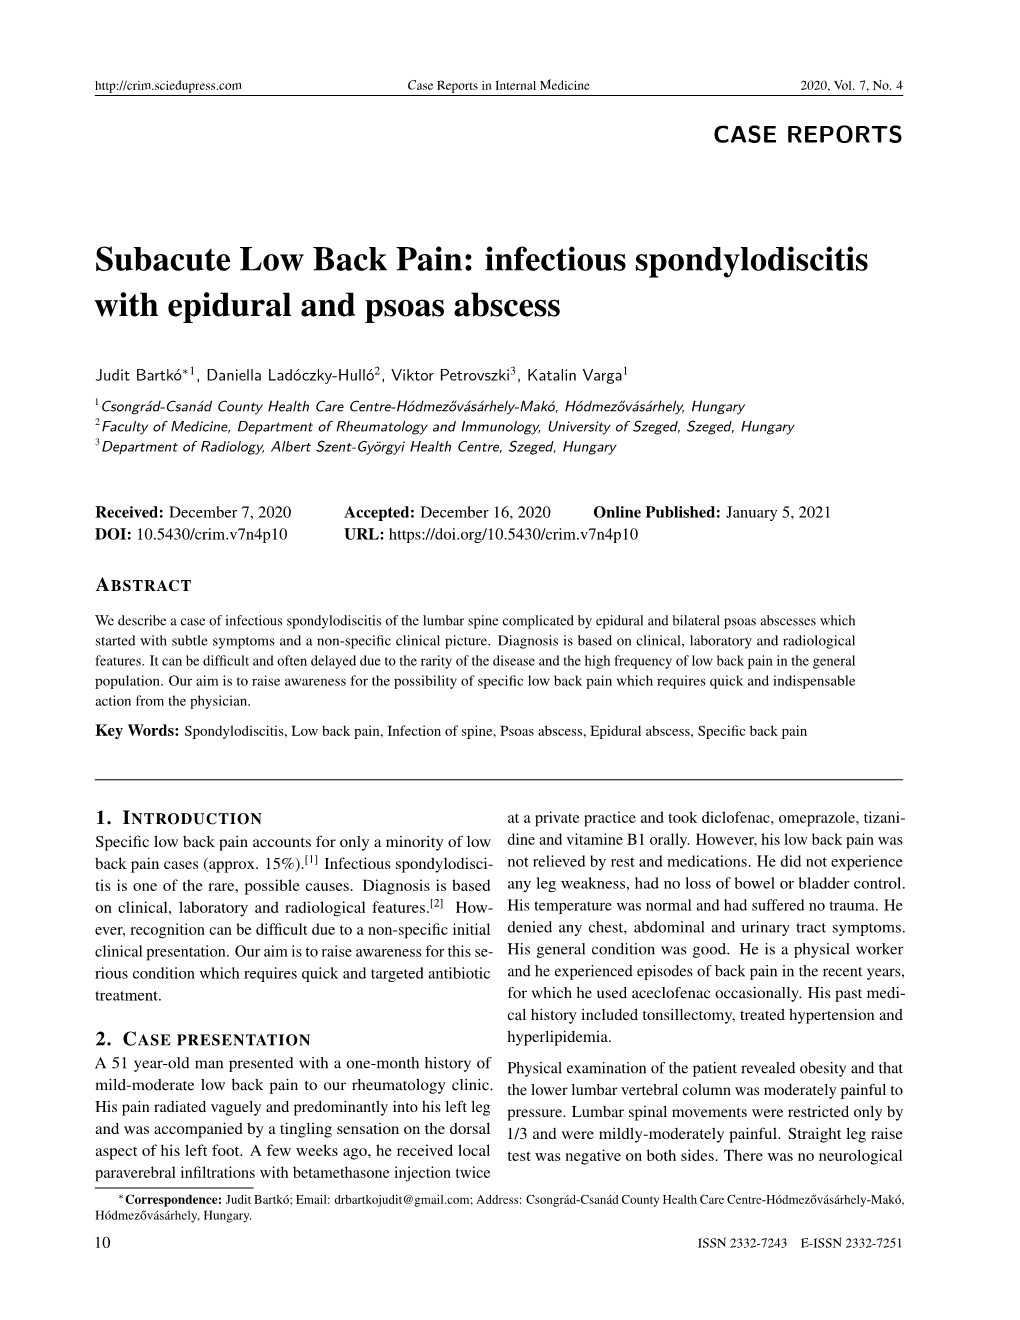 Infectious Spondylodiscitis with Epidural and Psoas Abscess